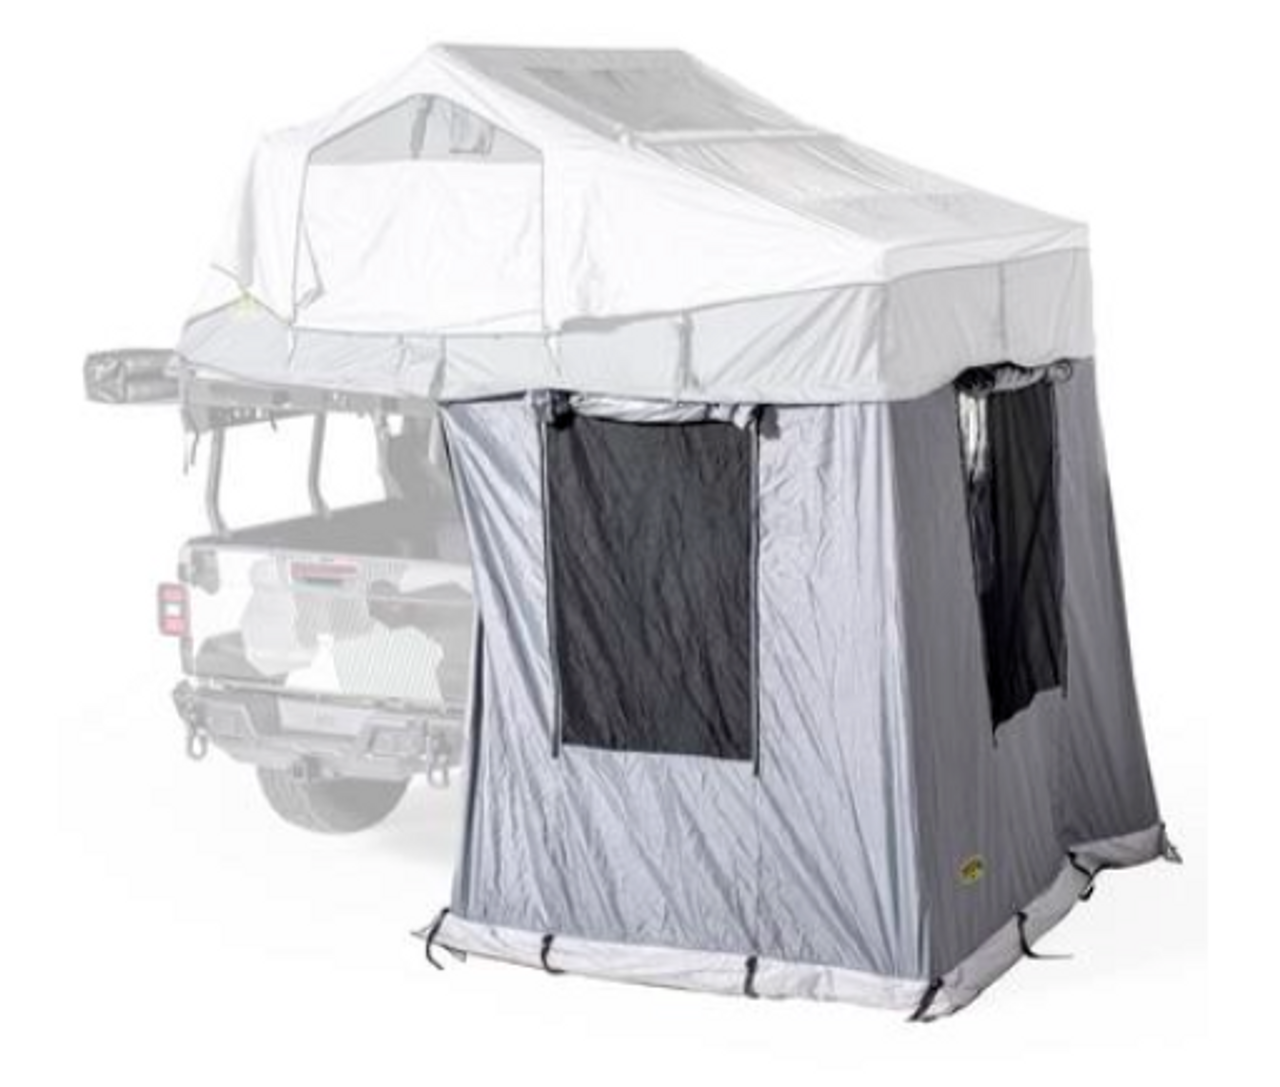 Smittybilt 2688 Overland Gen 2 XL Tent Annex in Gray for Overlander XL Gen 2 Roof Top Tent